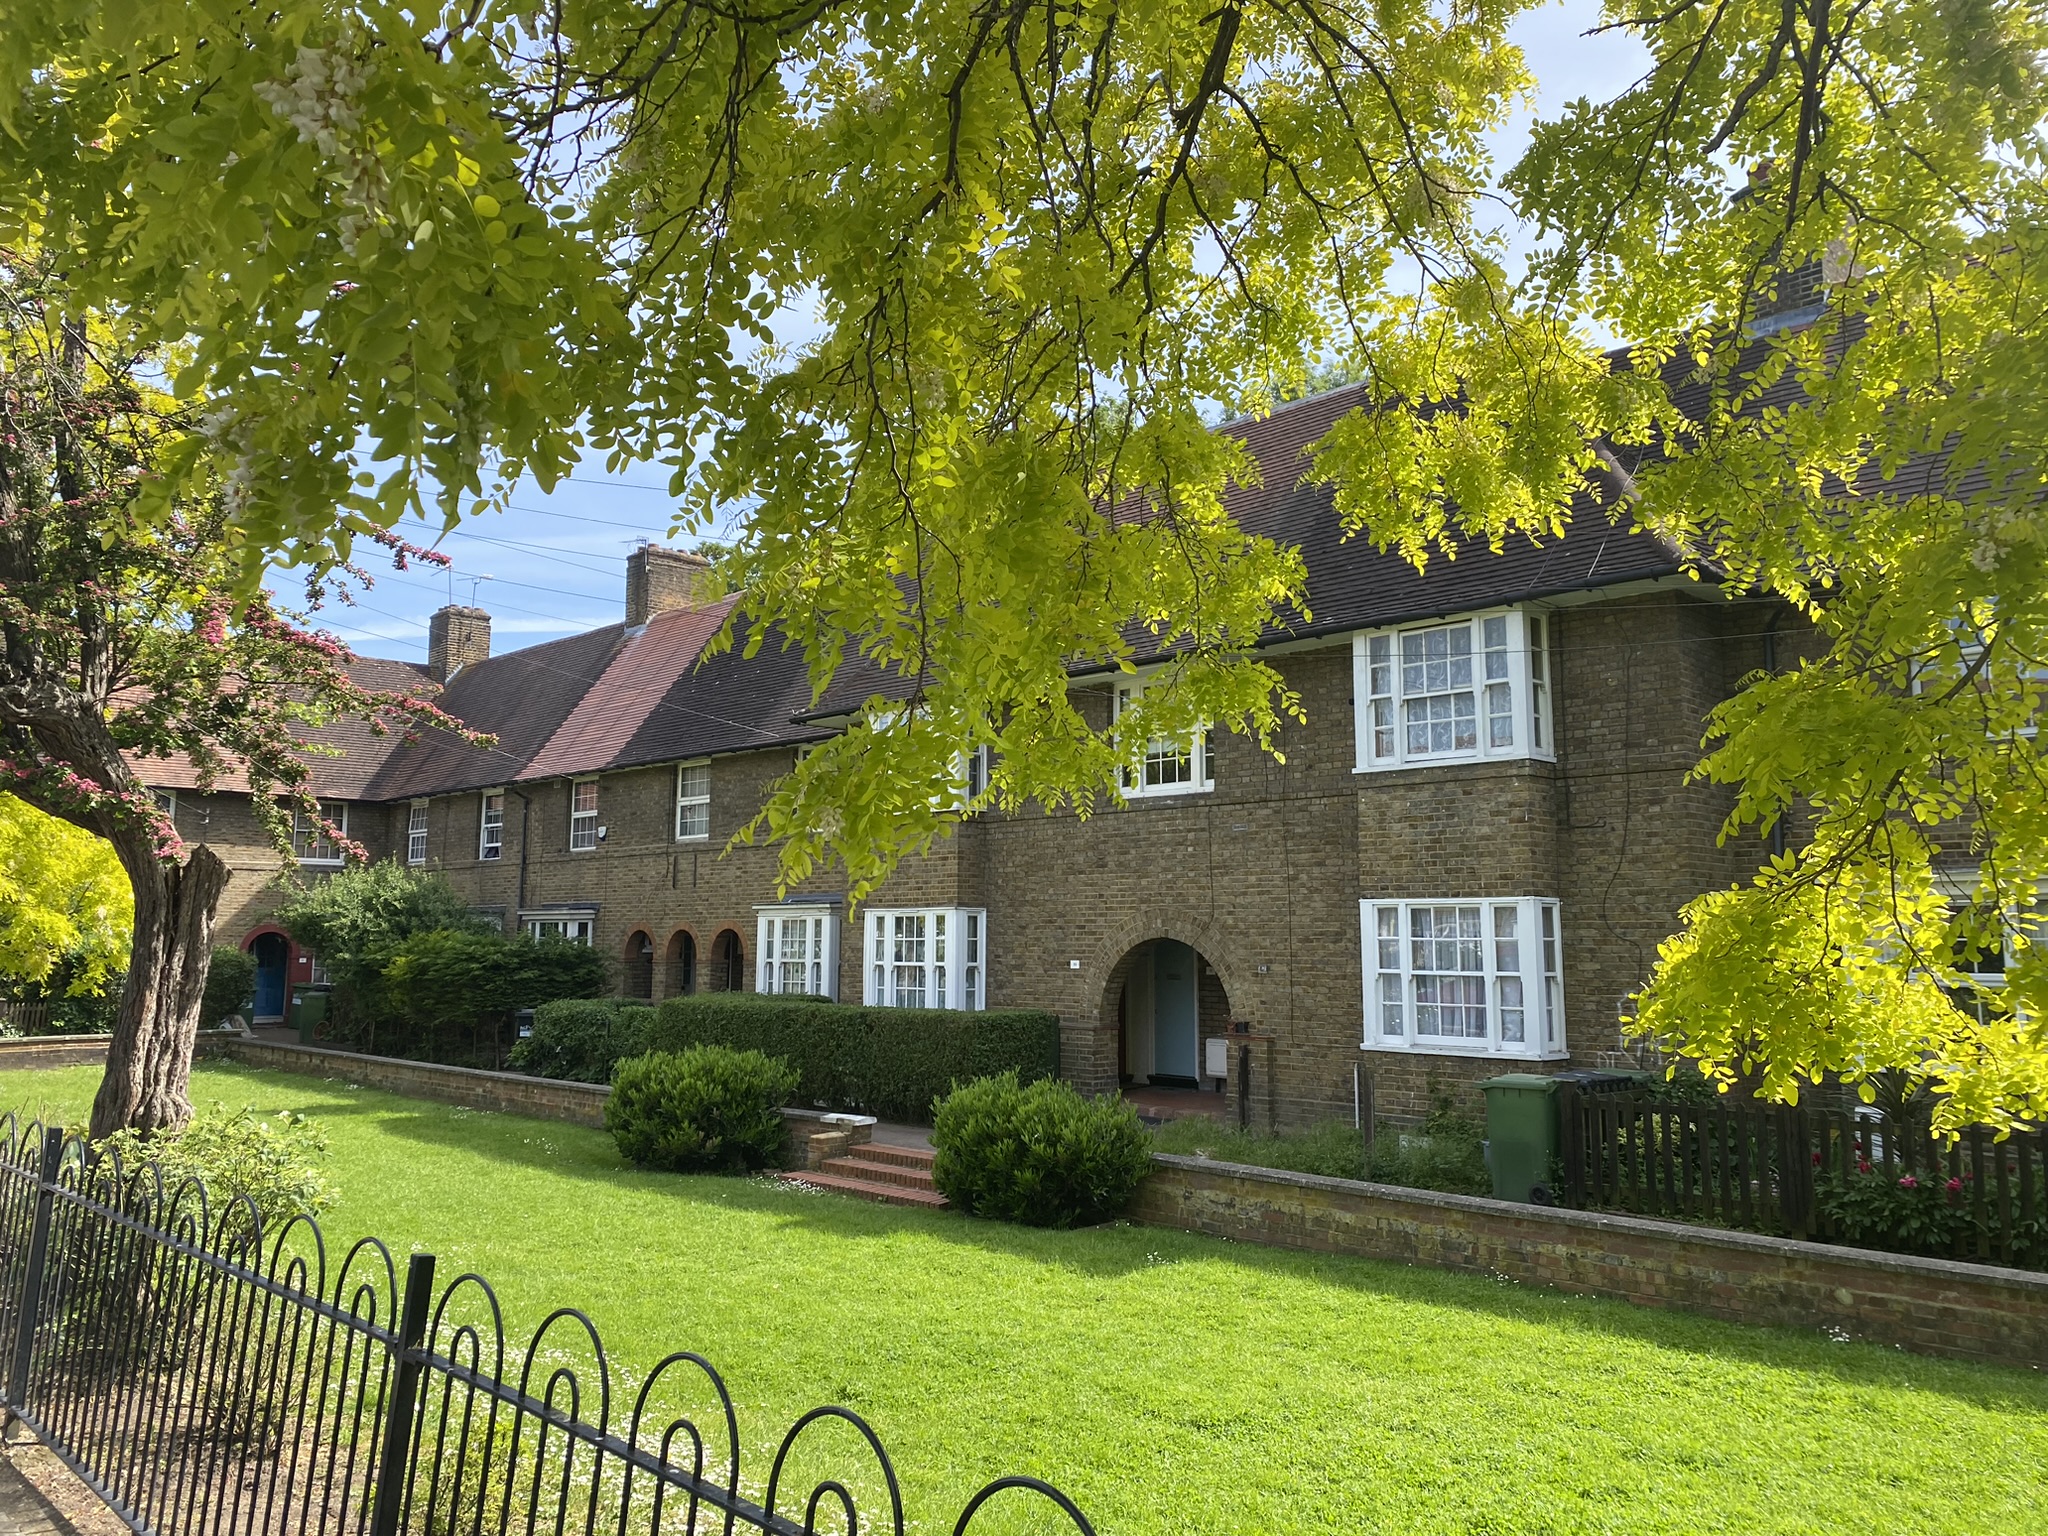 Old Oak to White City: a walk through London’s 20th century social housing